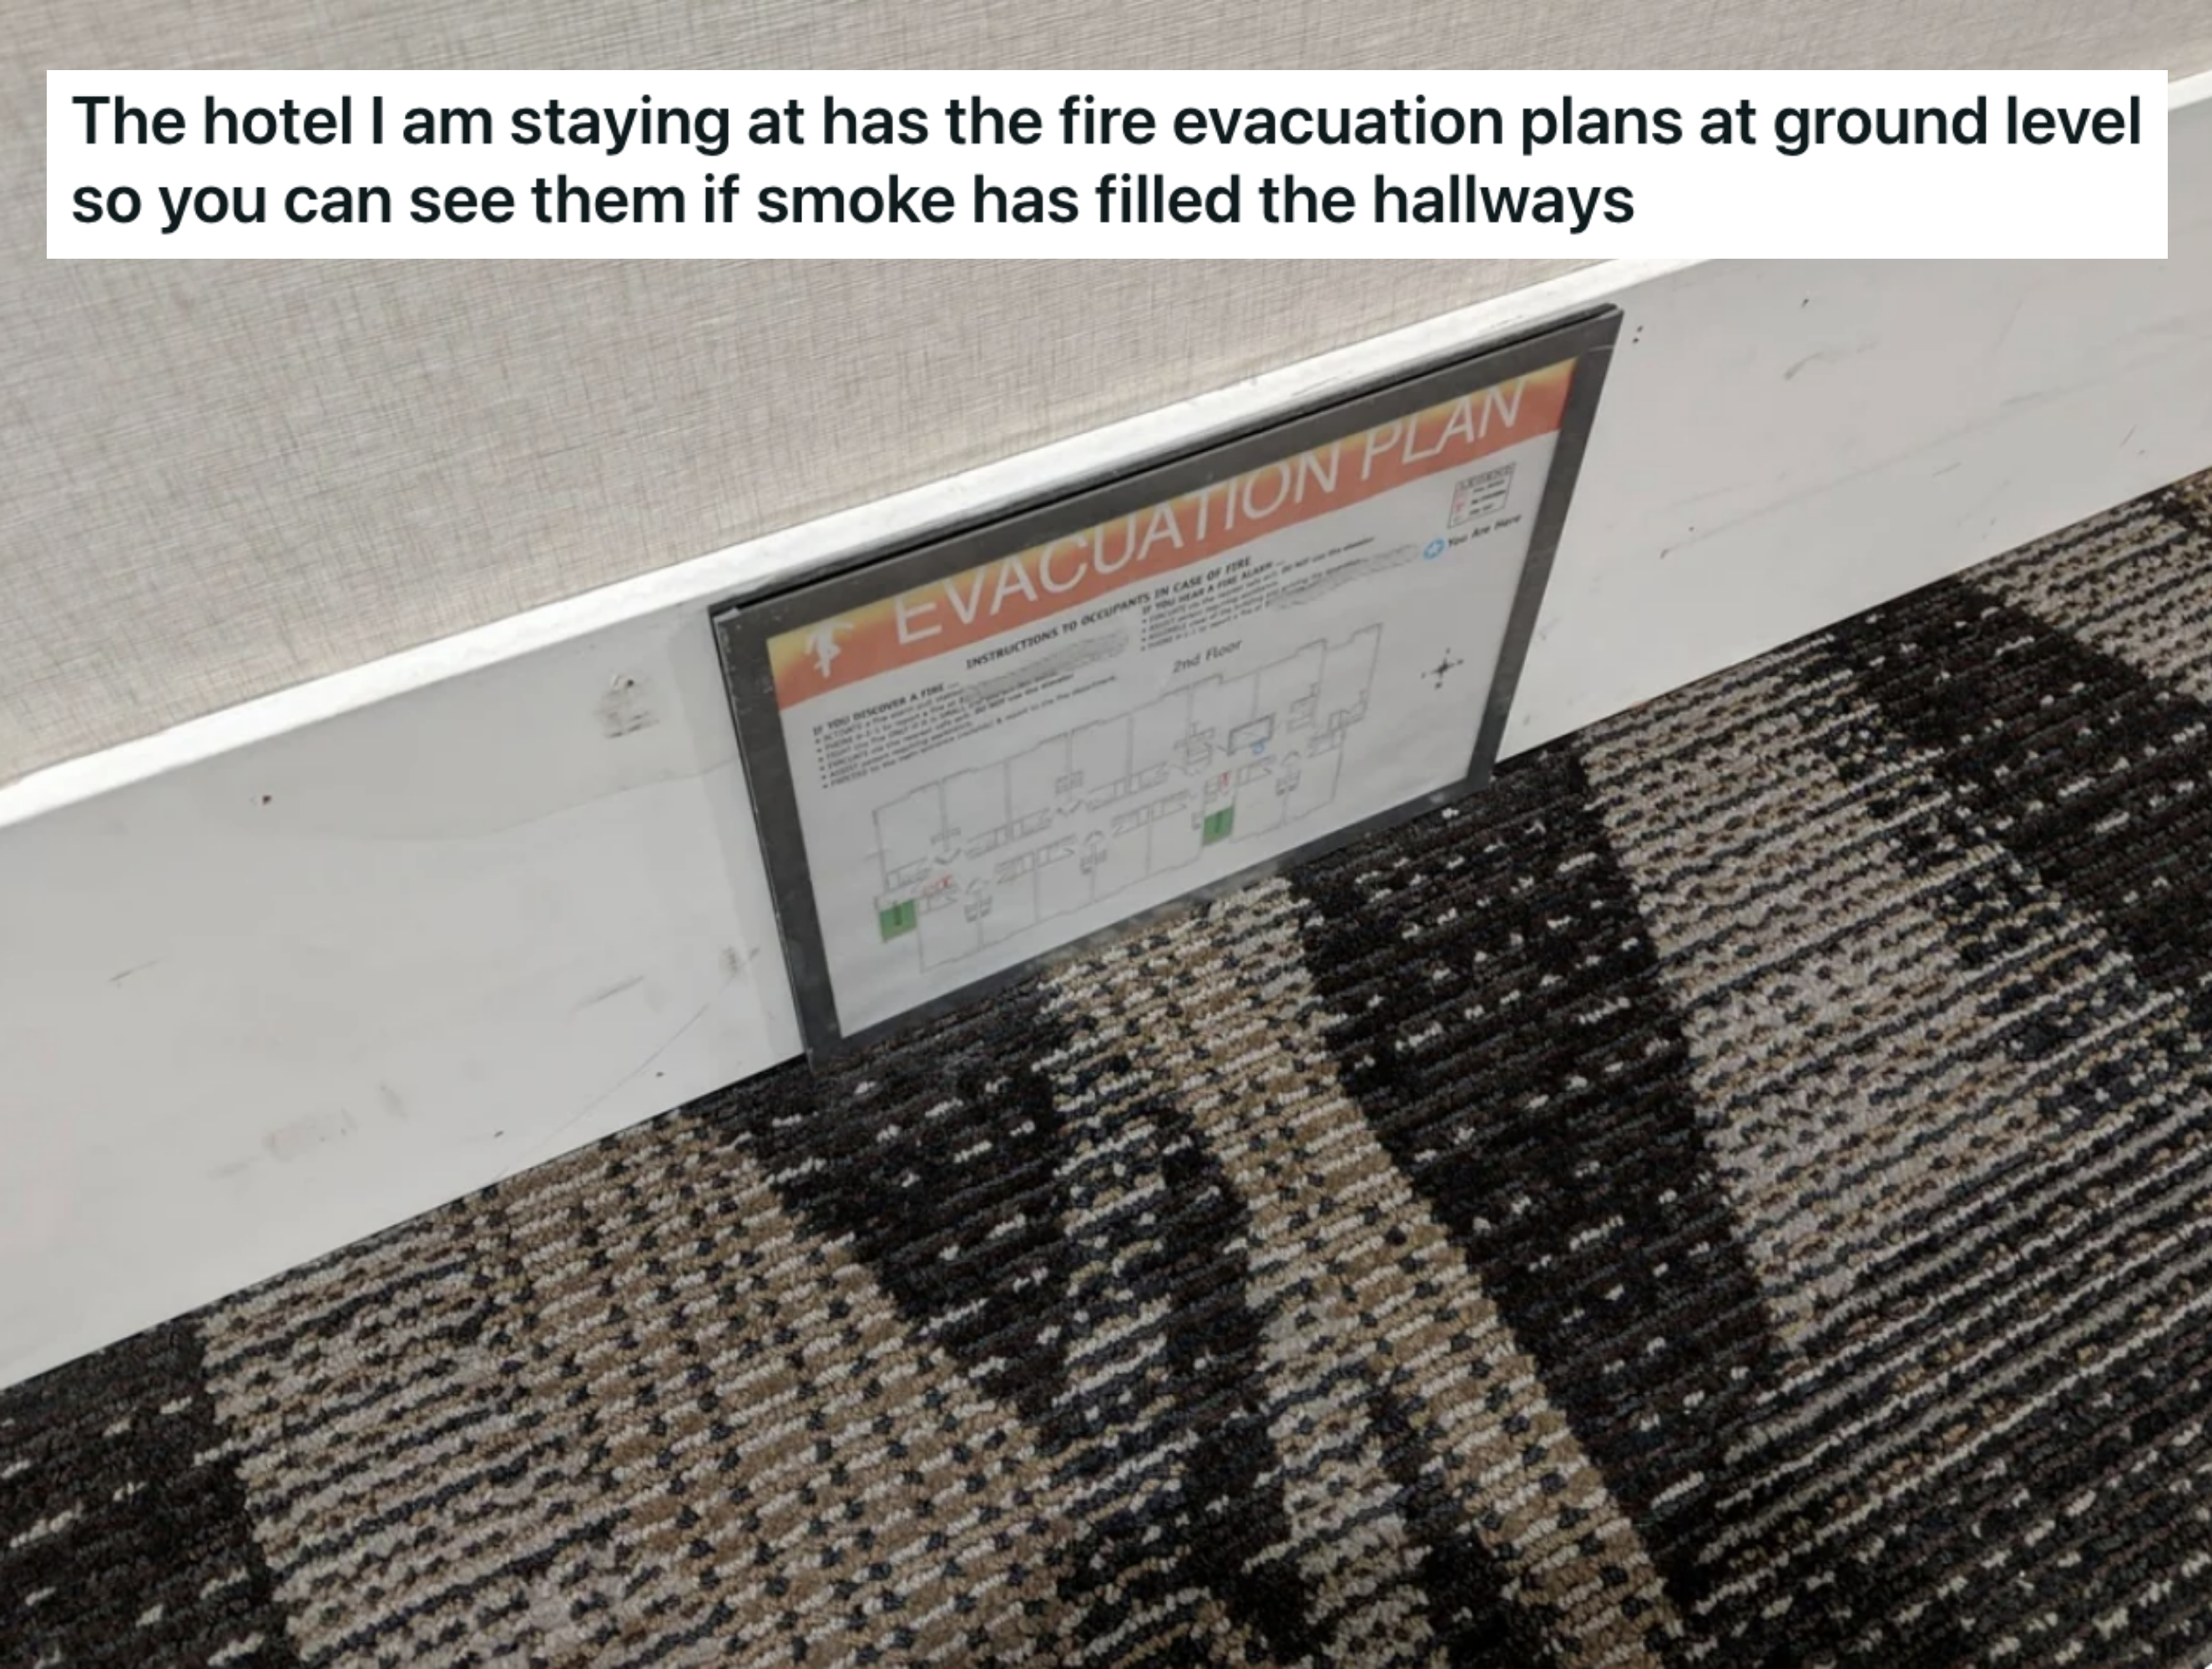 An evacuation plan